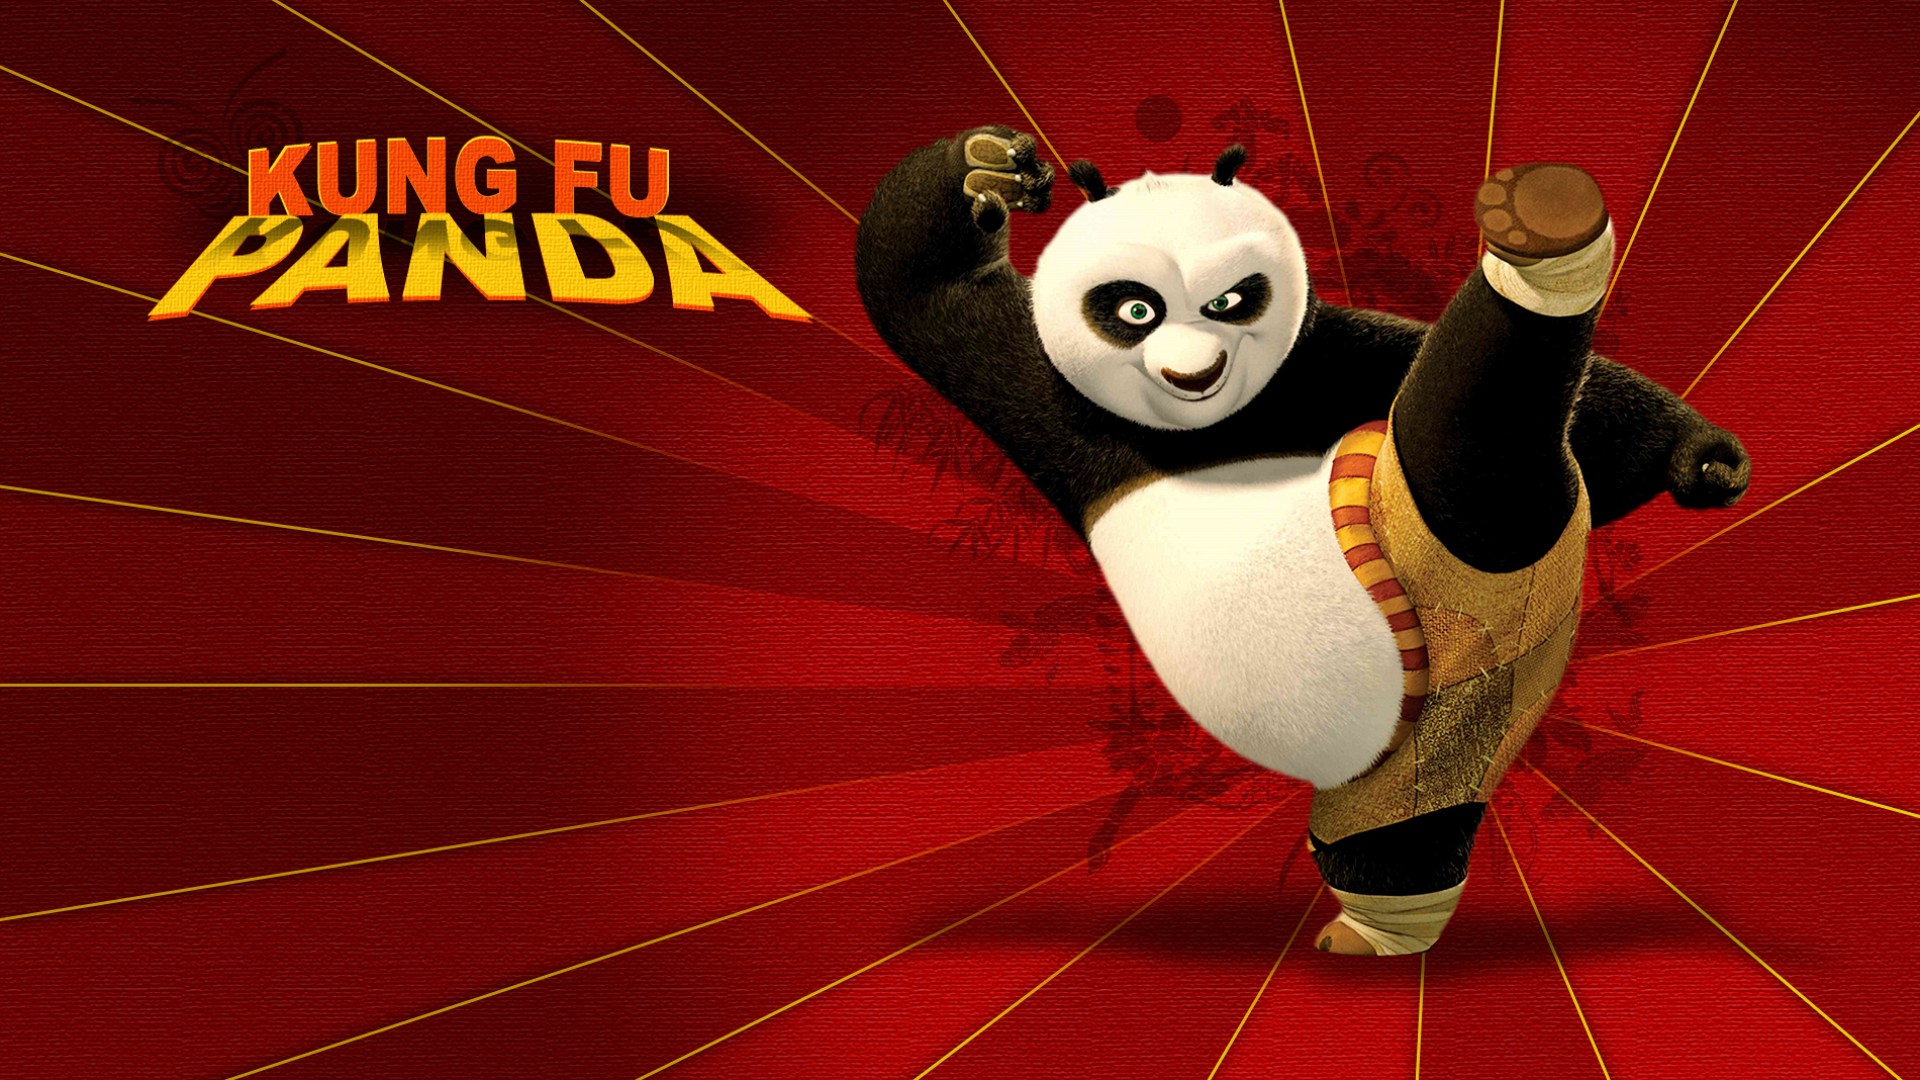 Kung Fu Panda HD Wallpaper Hebus Org High Definition